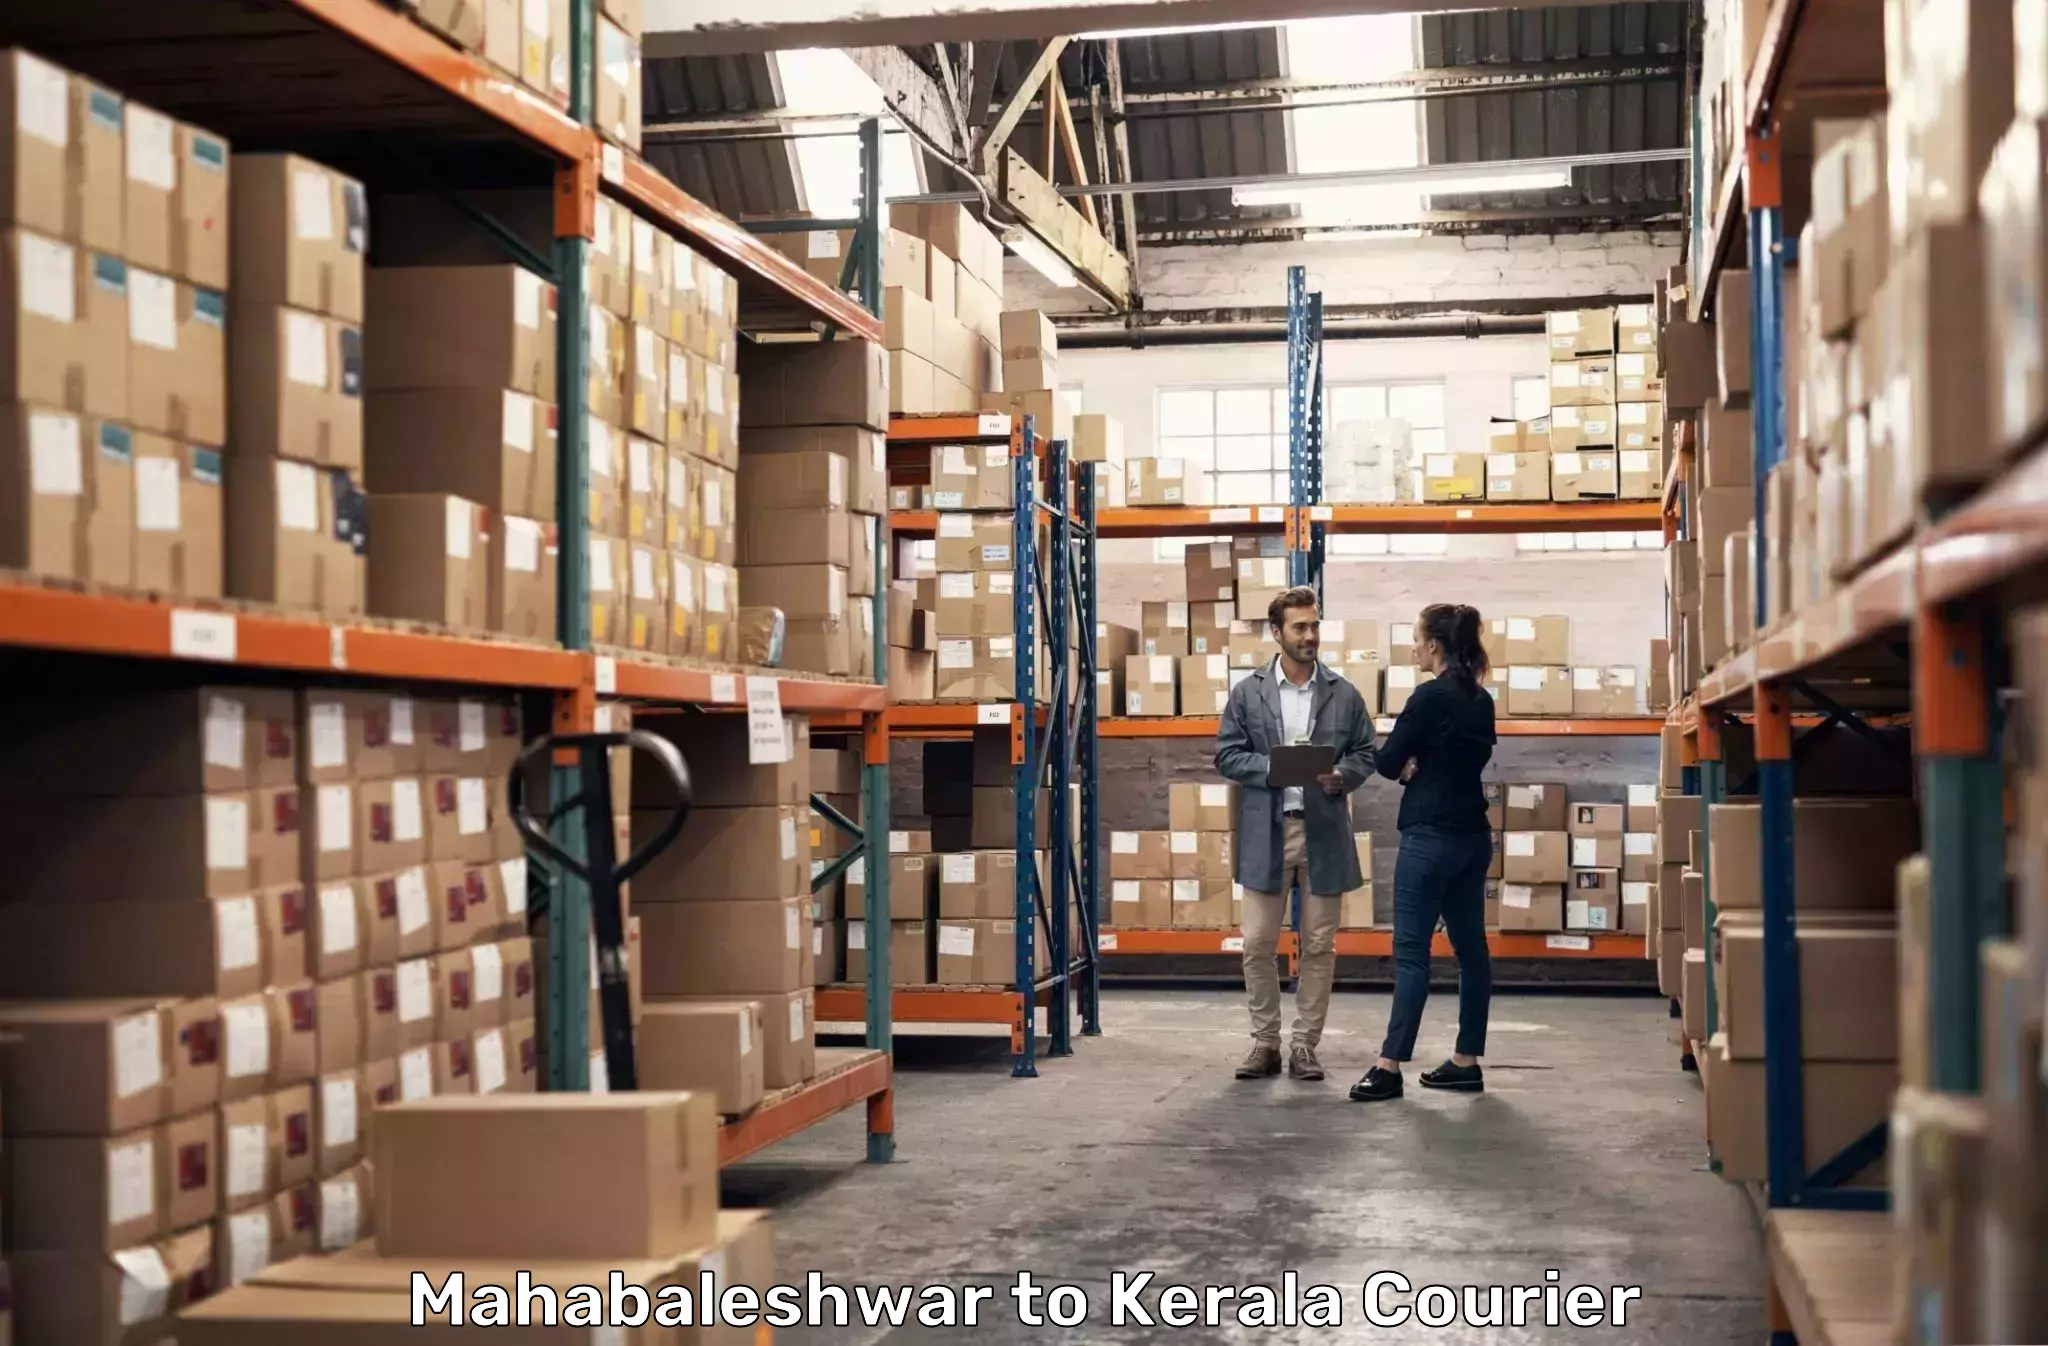 On-call courier service Mahabaleshwar to Ponekkara